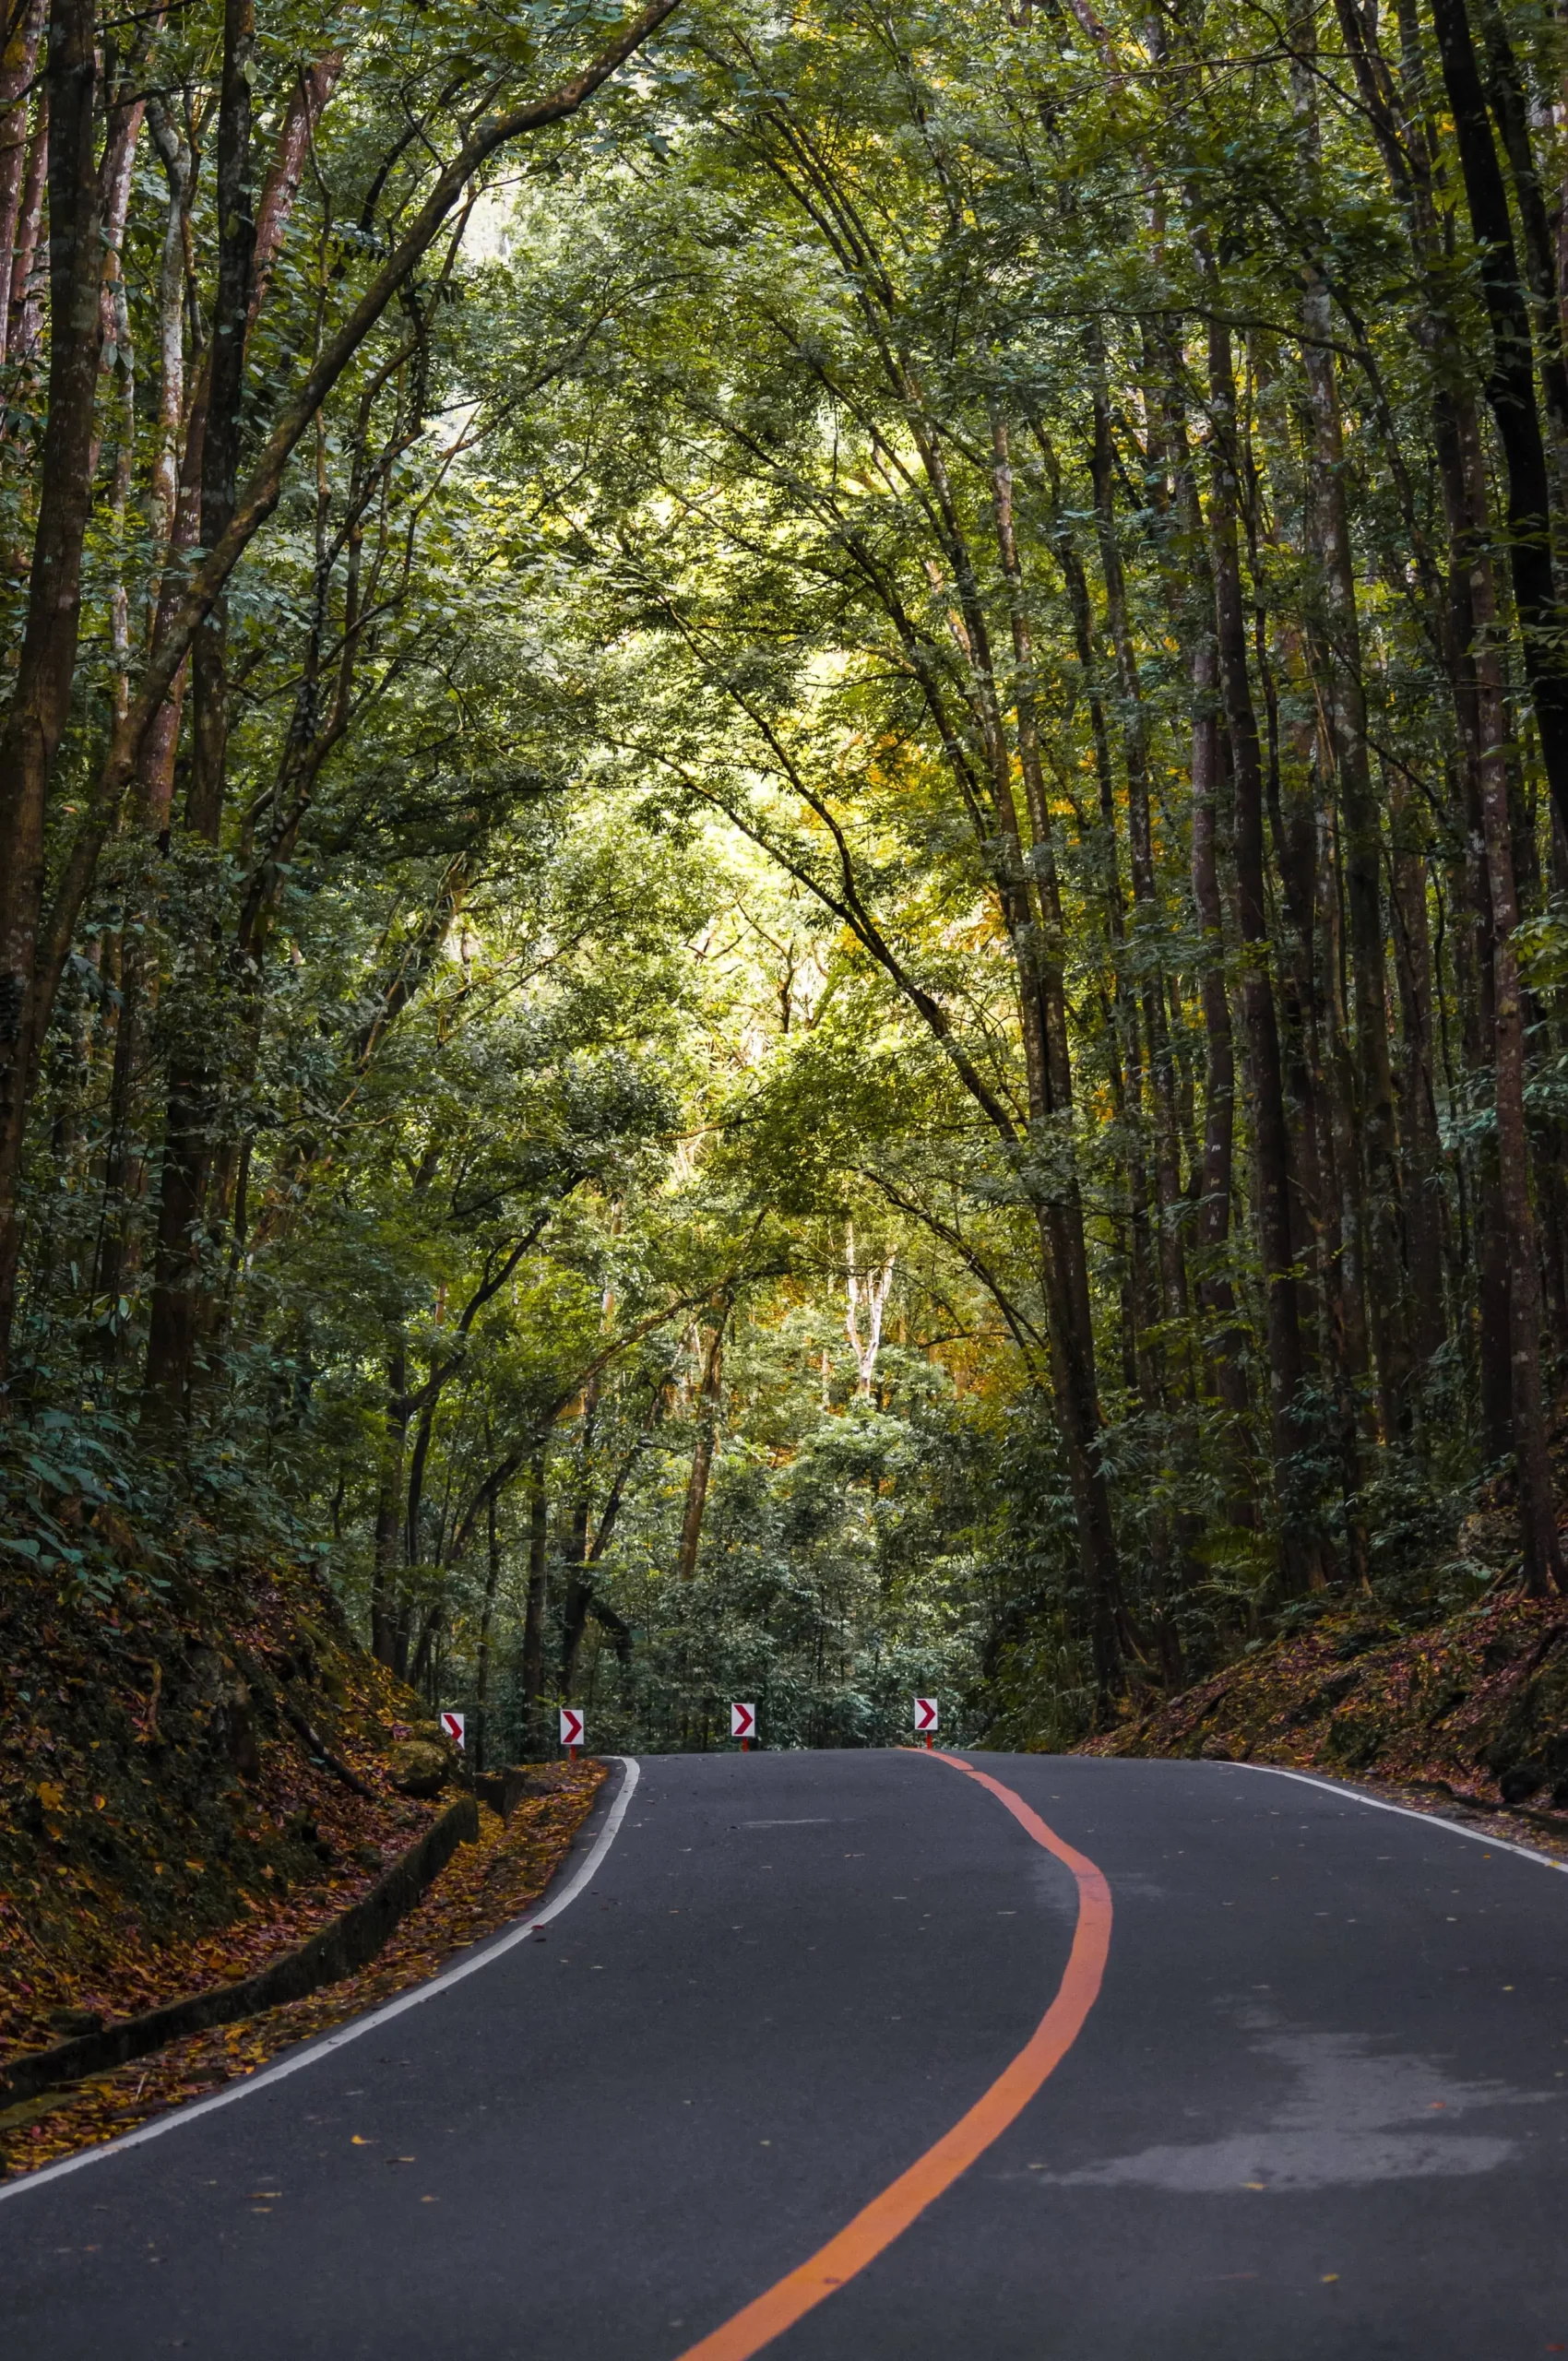 Man Made Forest  a tourist spot in bohol